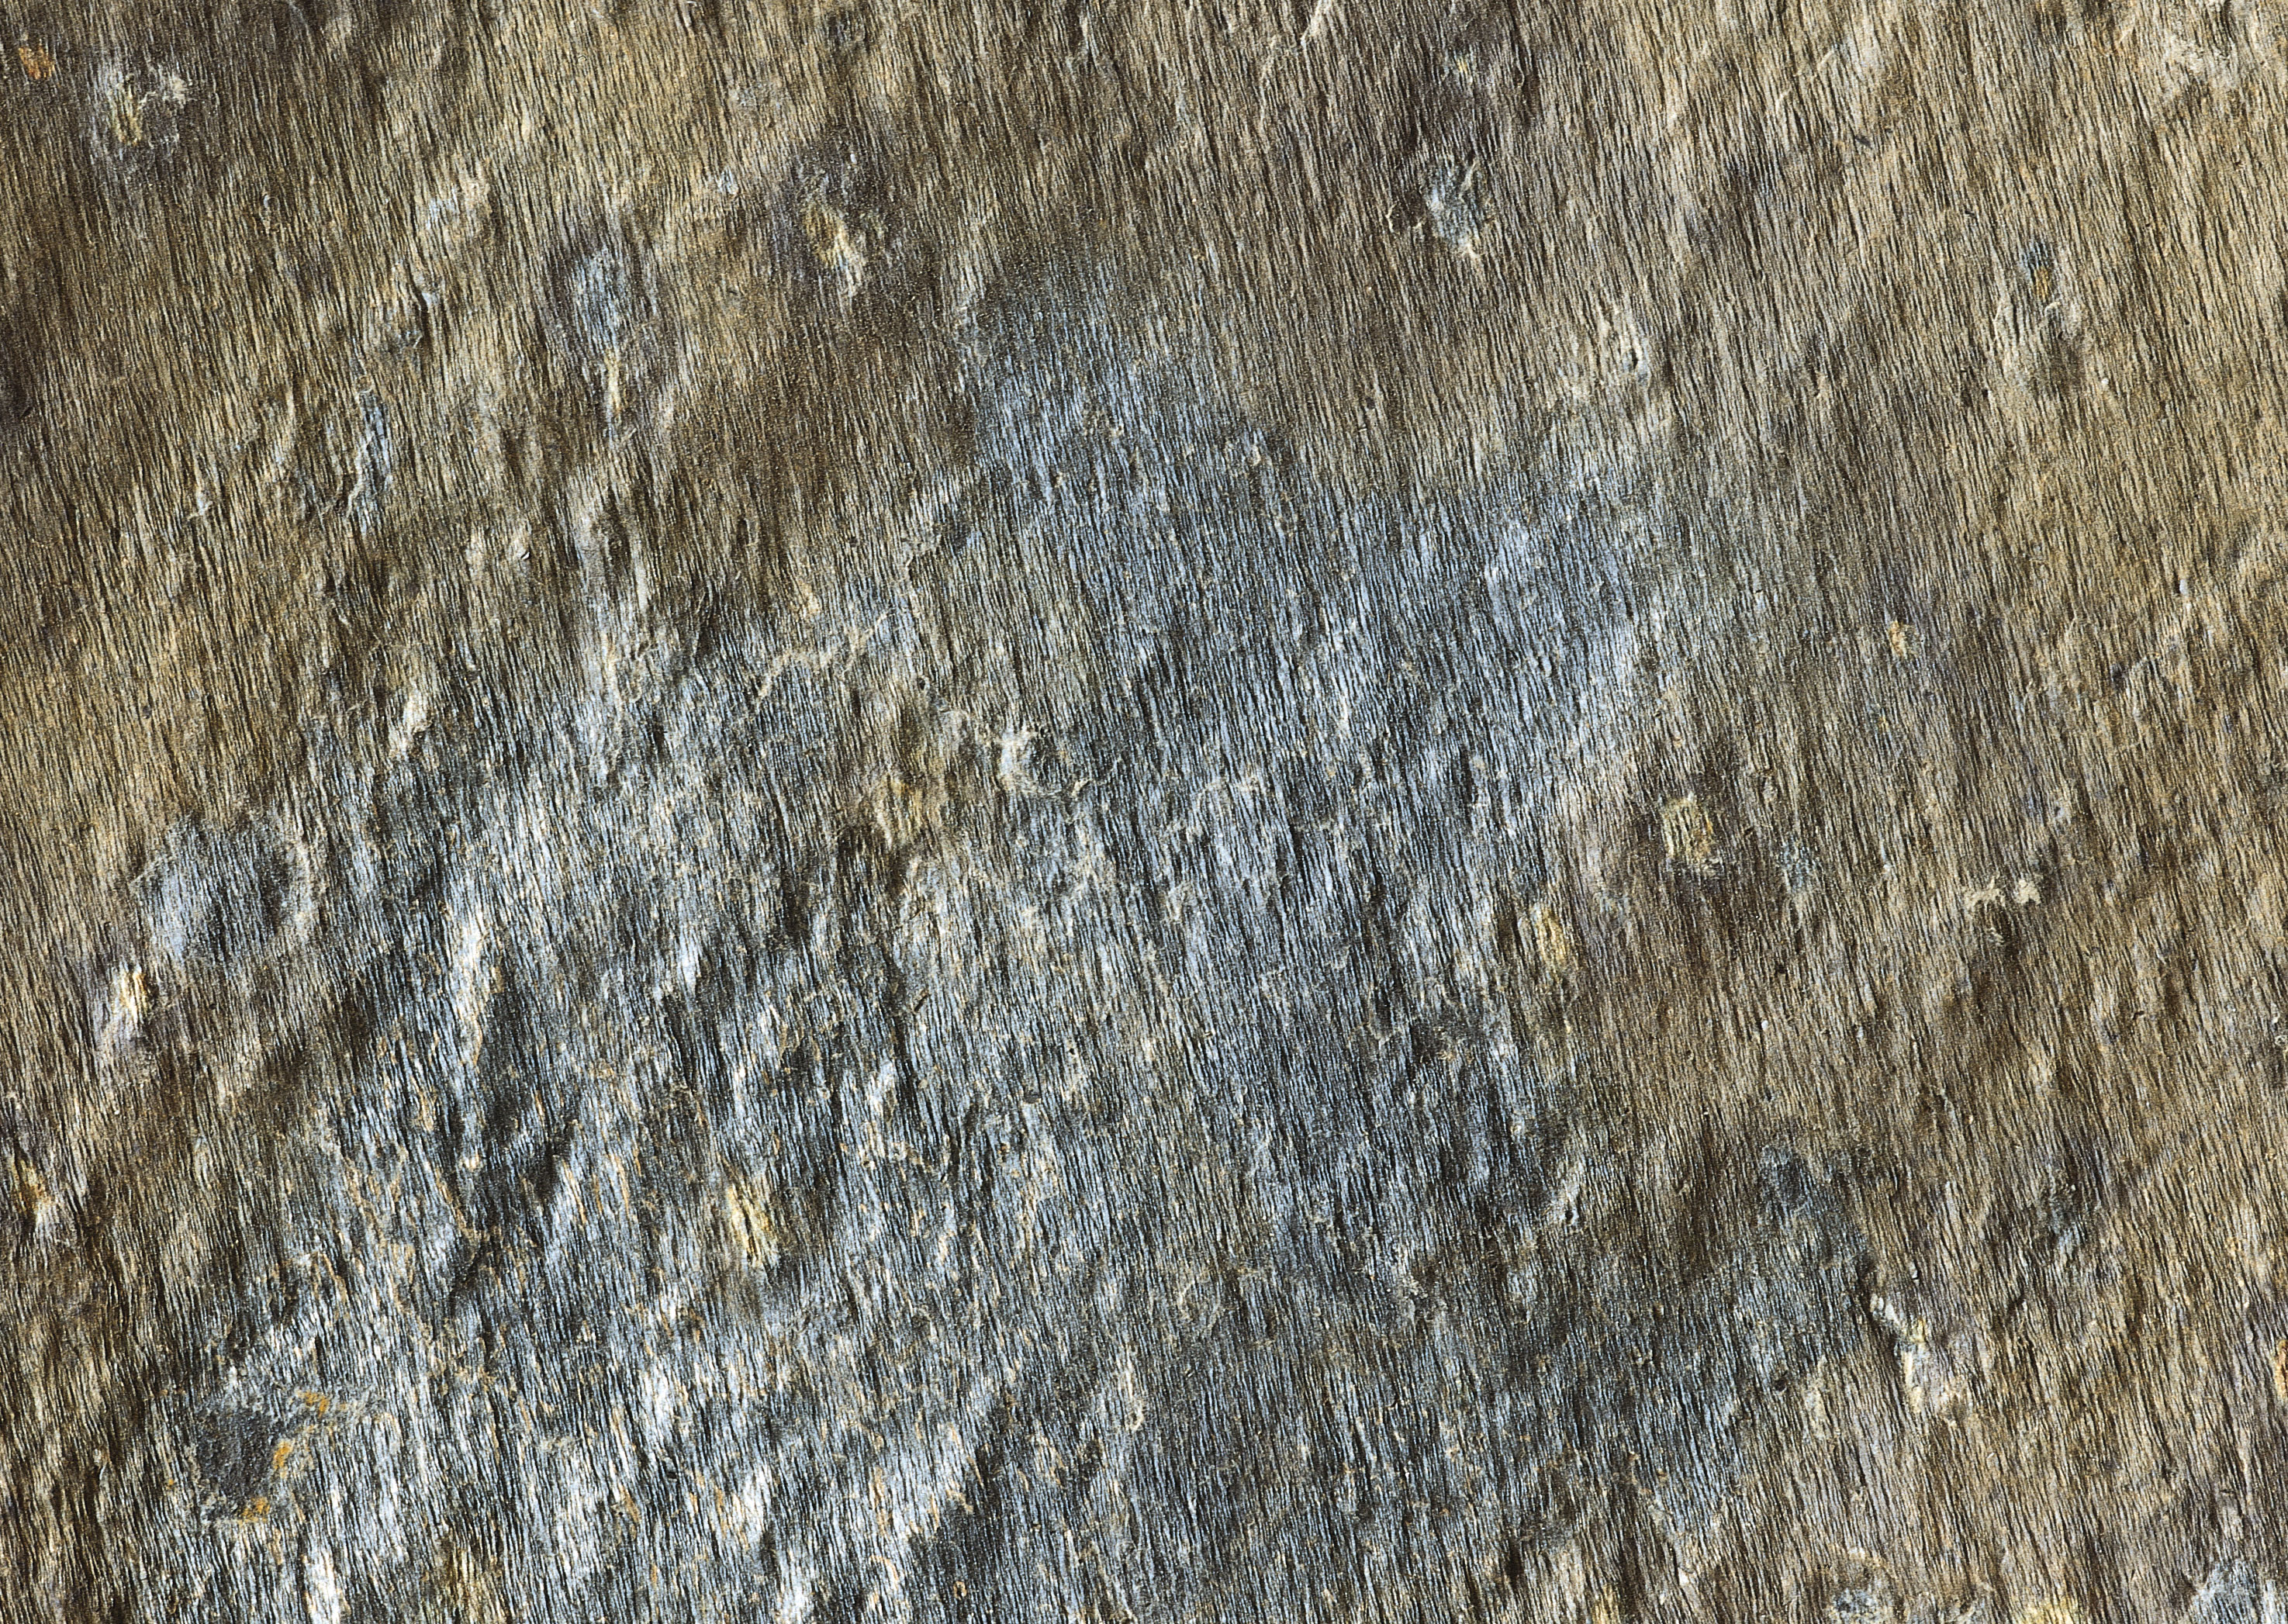 камень, каменная текстура, фон, stone texture background